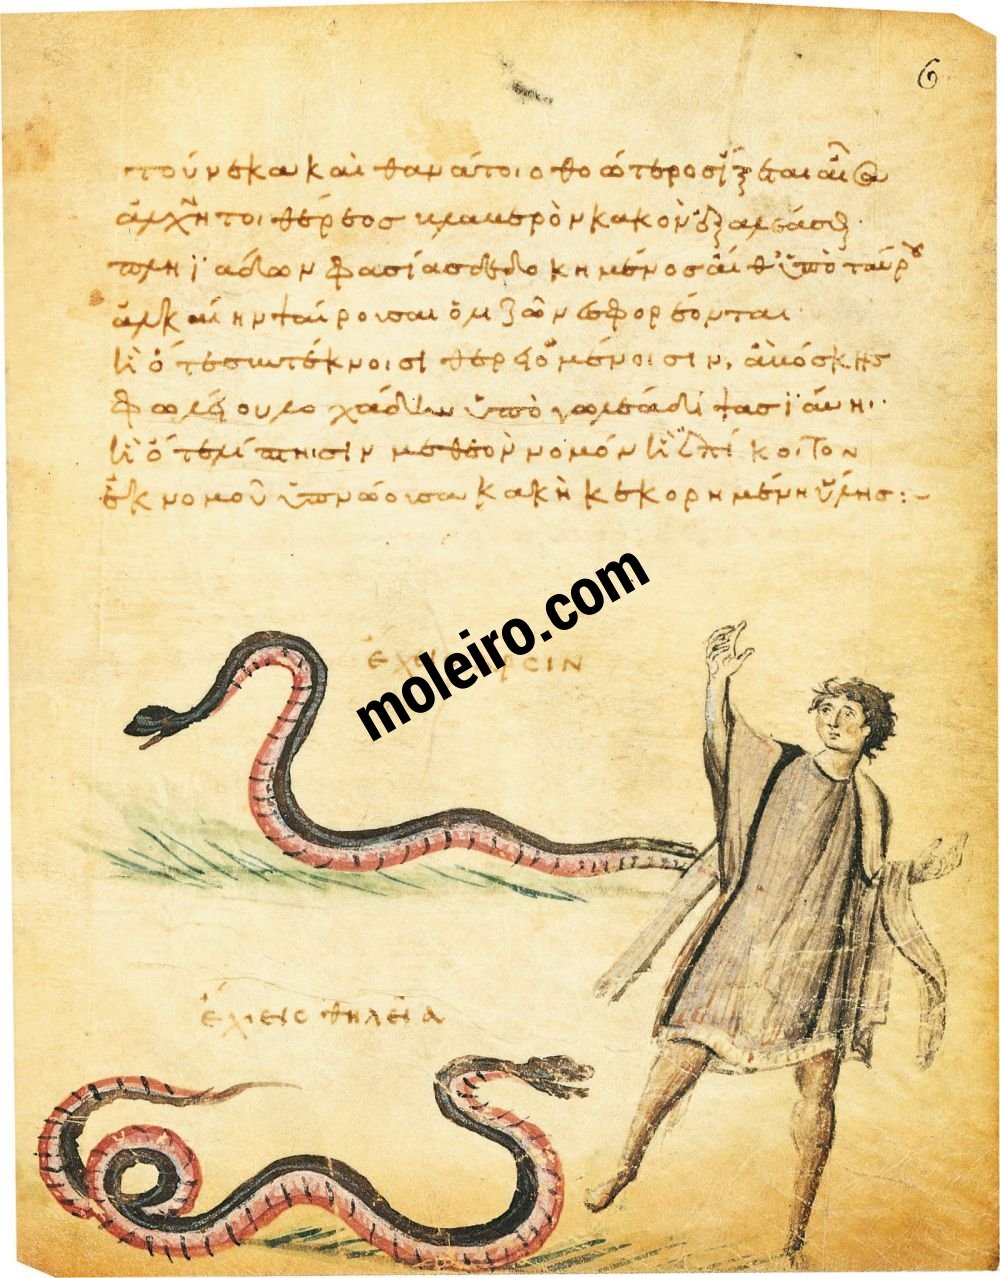 Theriaka and Alexipharmaka by Nicander Folio 6r